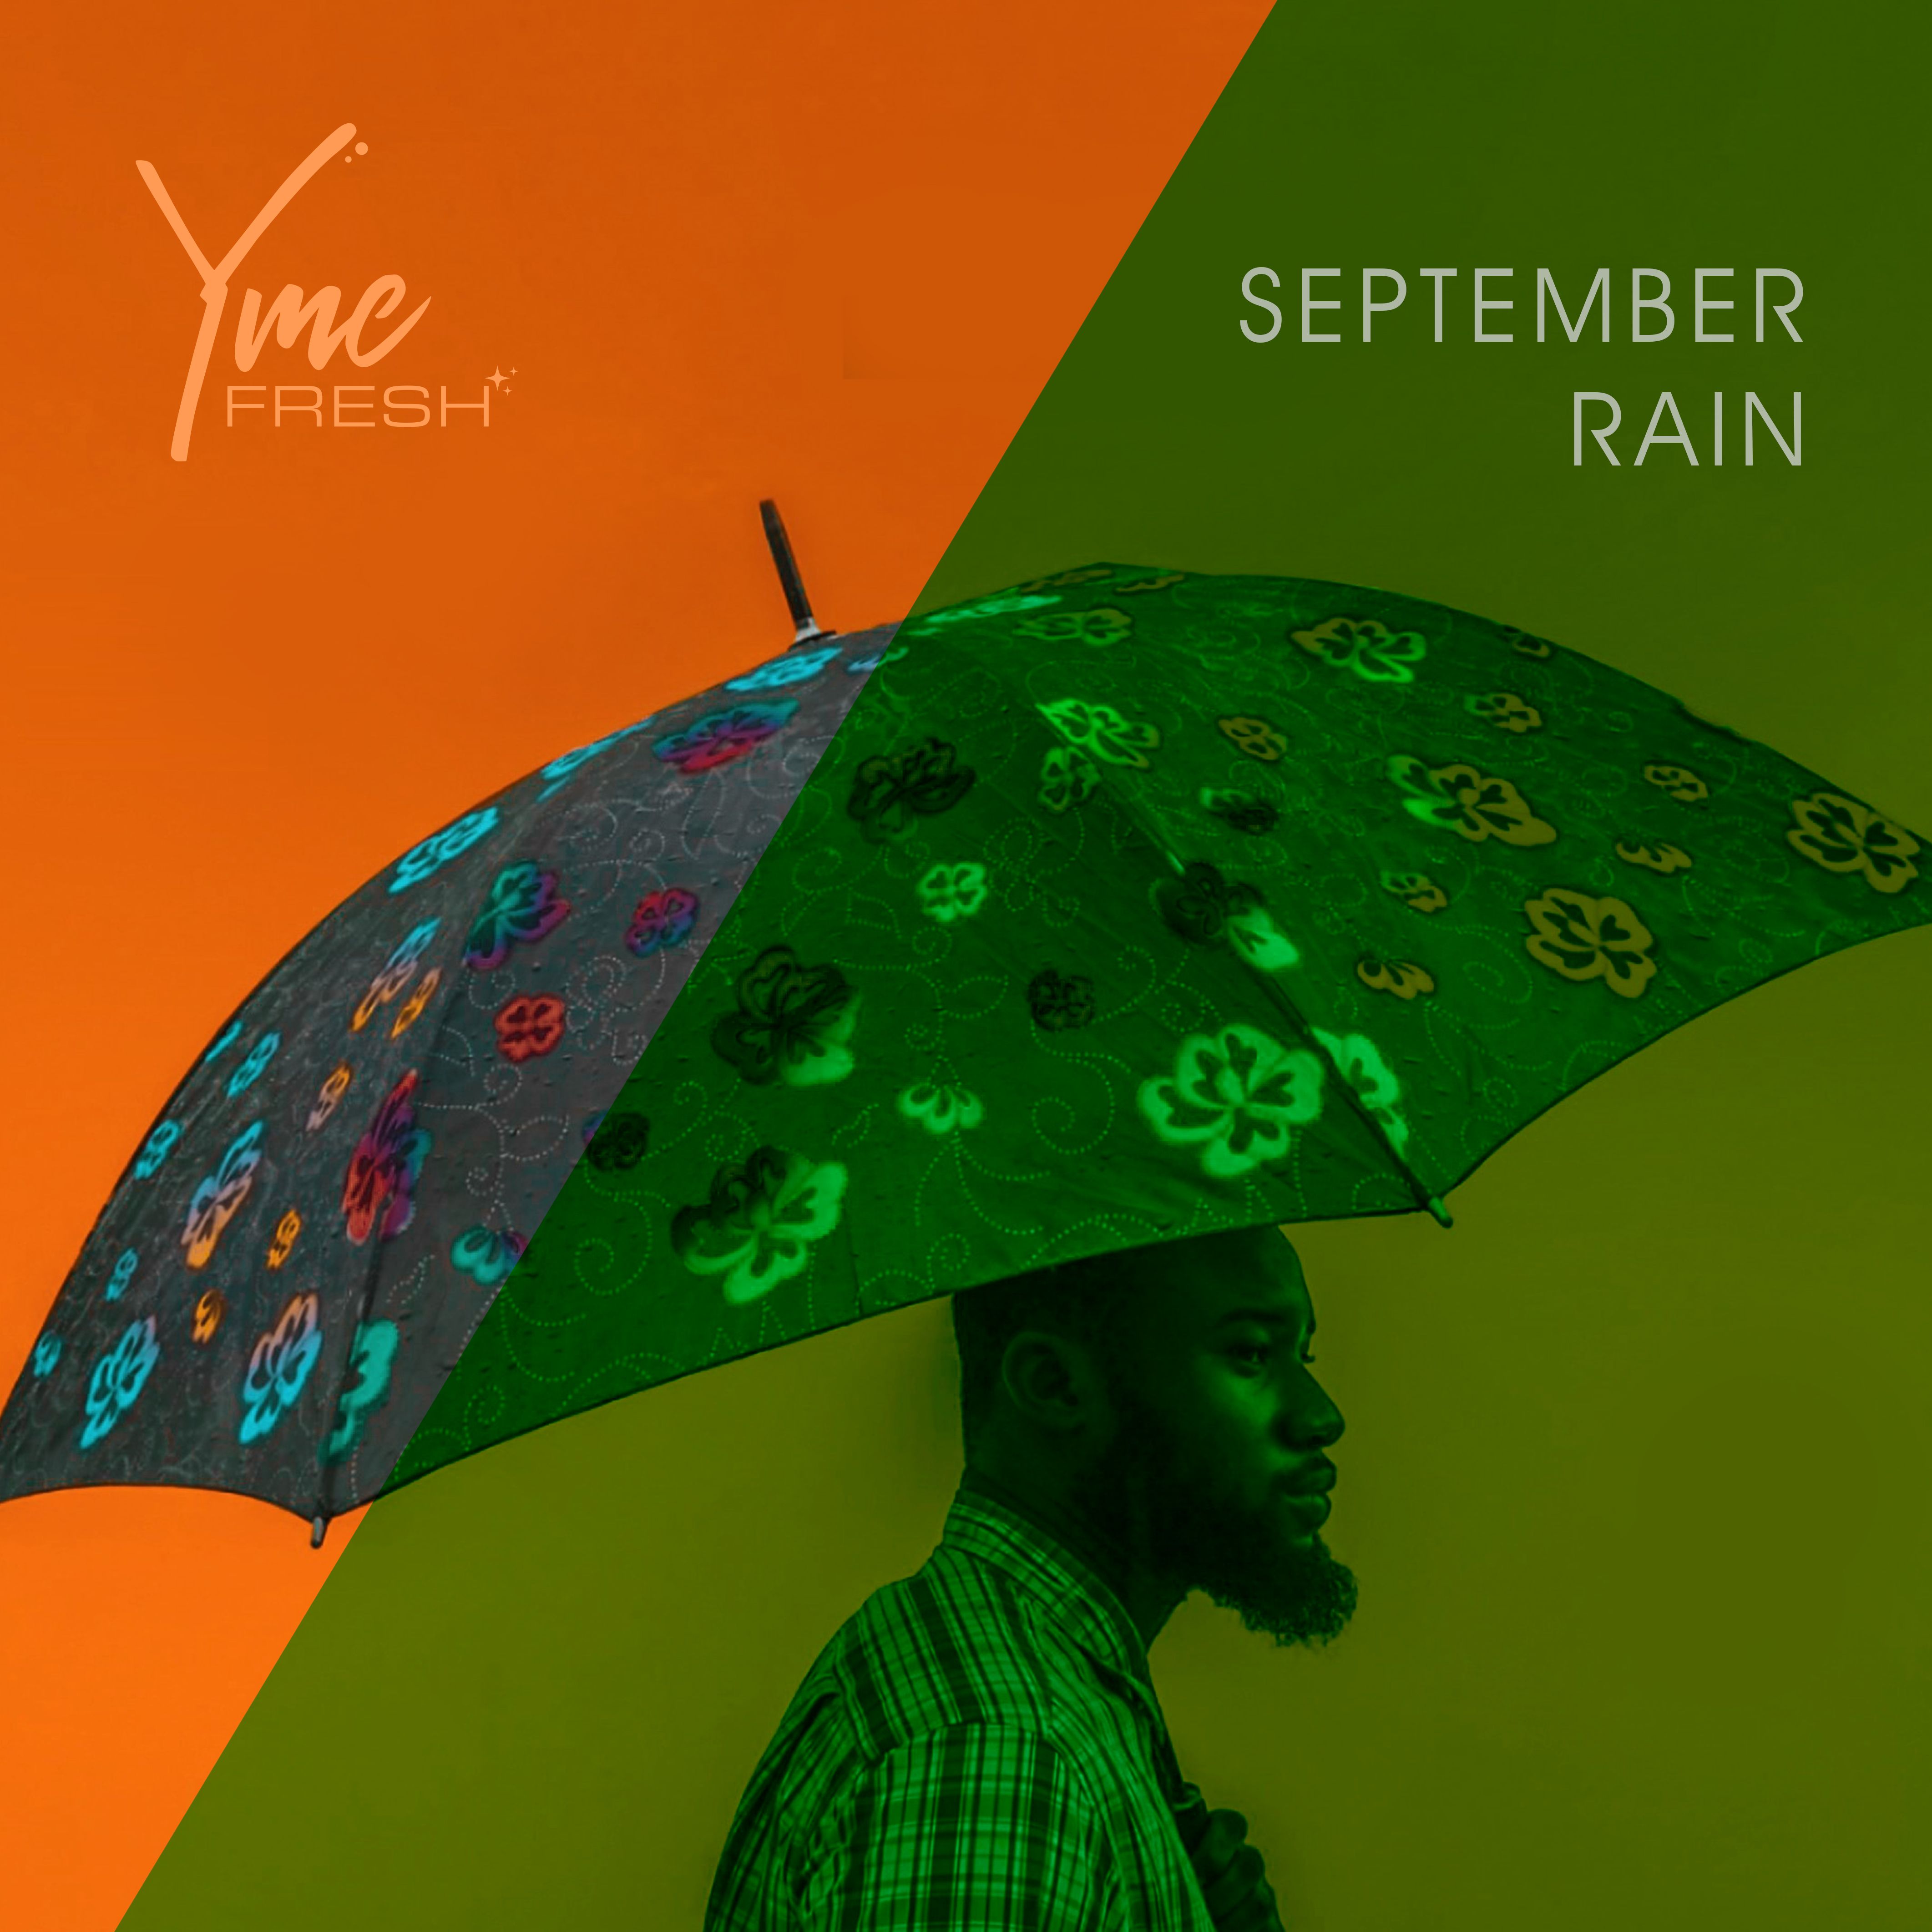 Landa [No Copyright Music] "September Rain" Chill Lofi Hip Hop (Copyright Free) Chillhop for Youtube